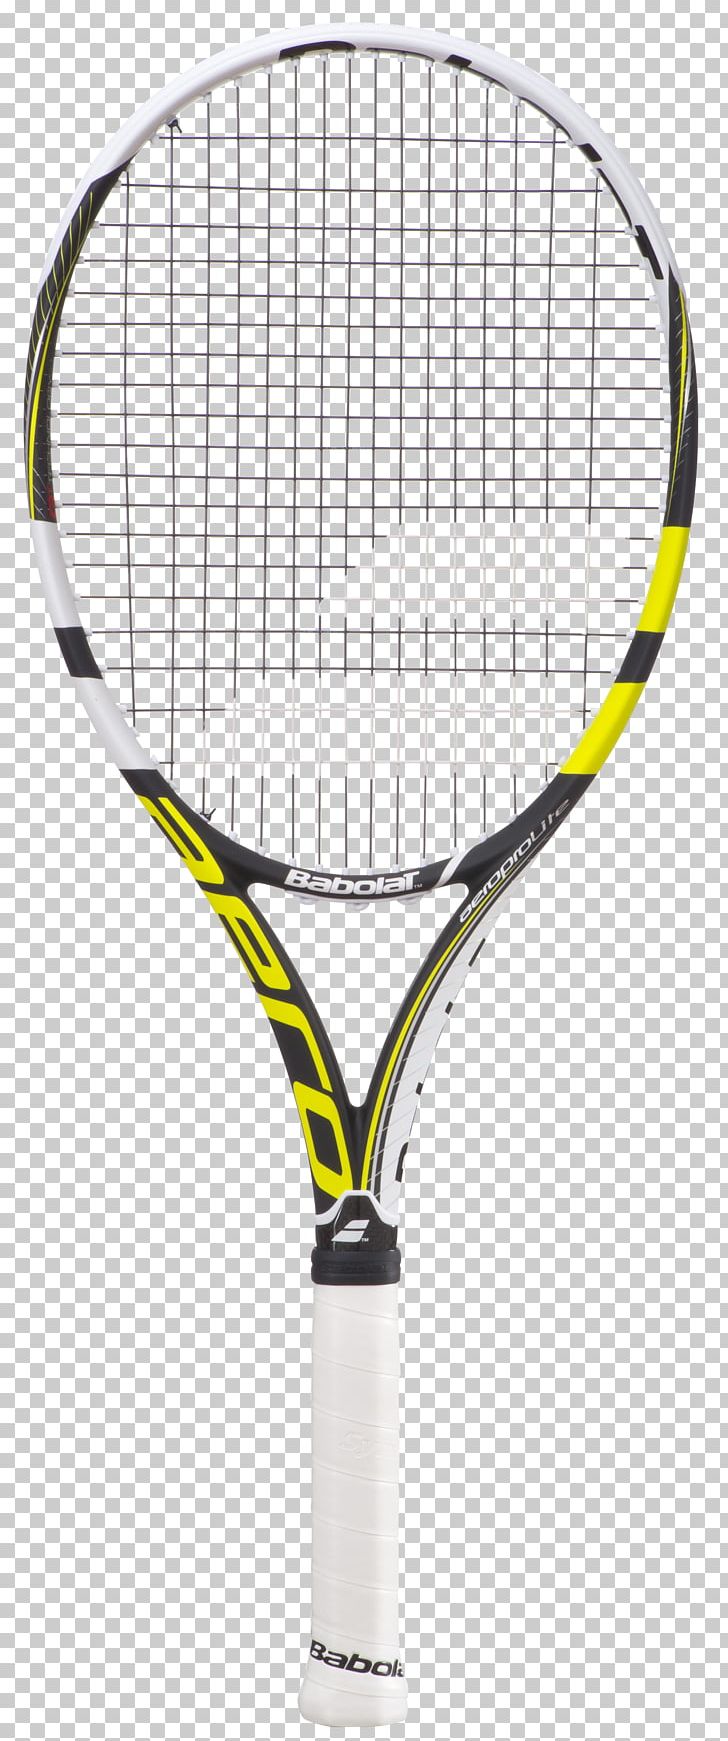 Babolat Racket Rakieta Tenisowa Tennis Strings PNG, Clipart, Babolat, Grip, Head, Line, Padel Free PNG Download